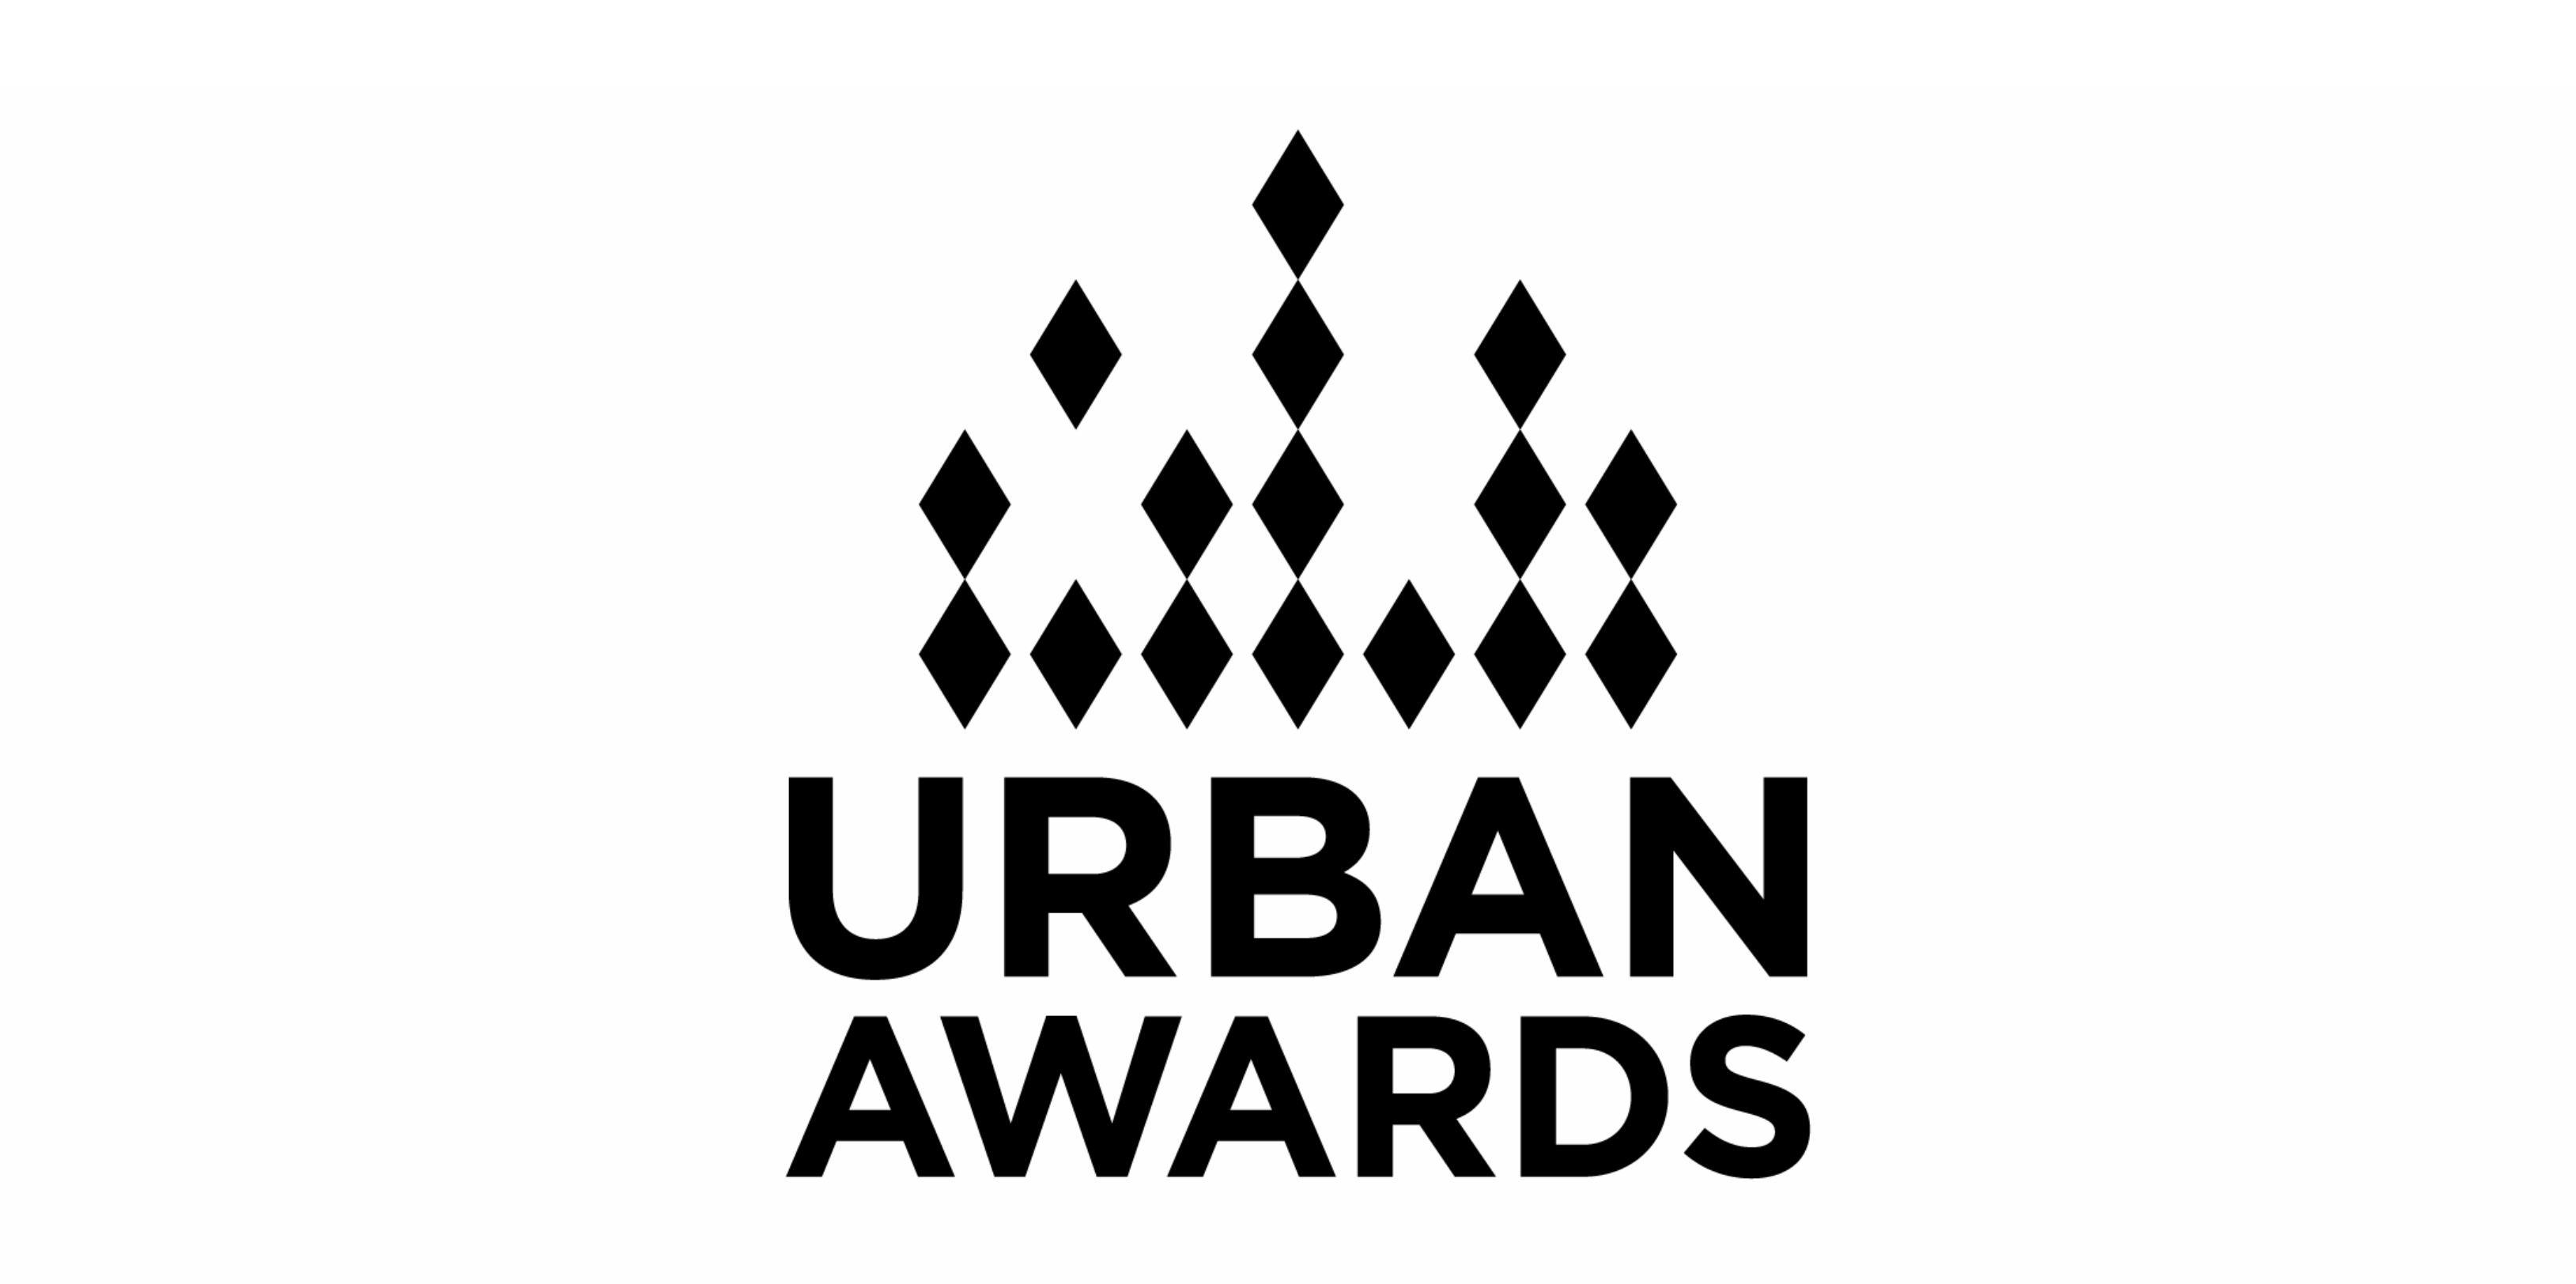 Urban Awards Image